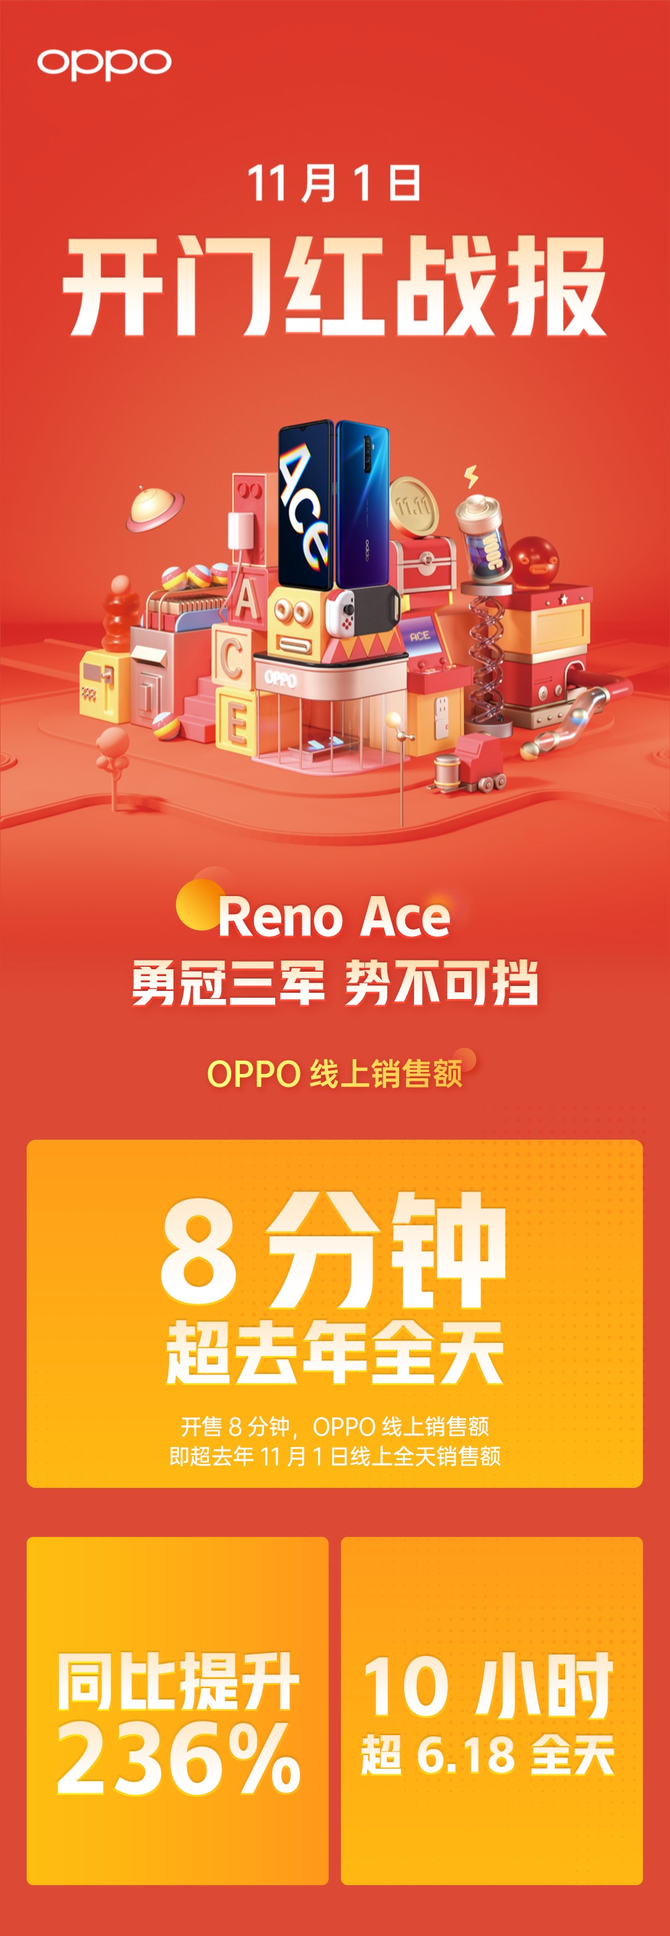 RenoAce首销告捷，稳居电商平台2500-3500价位段冠军